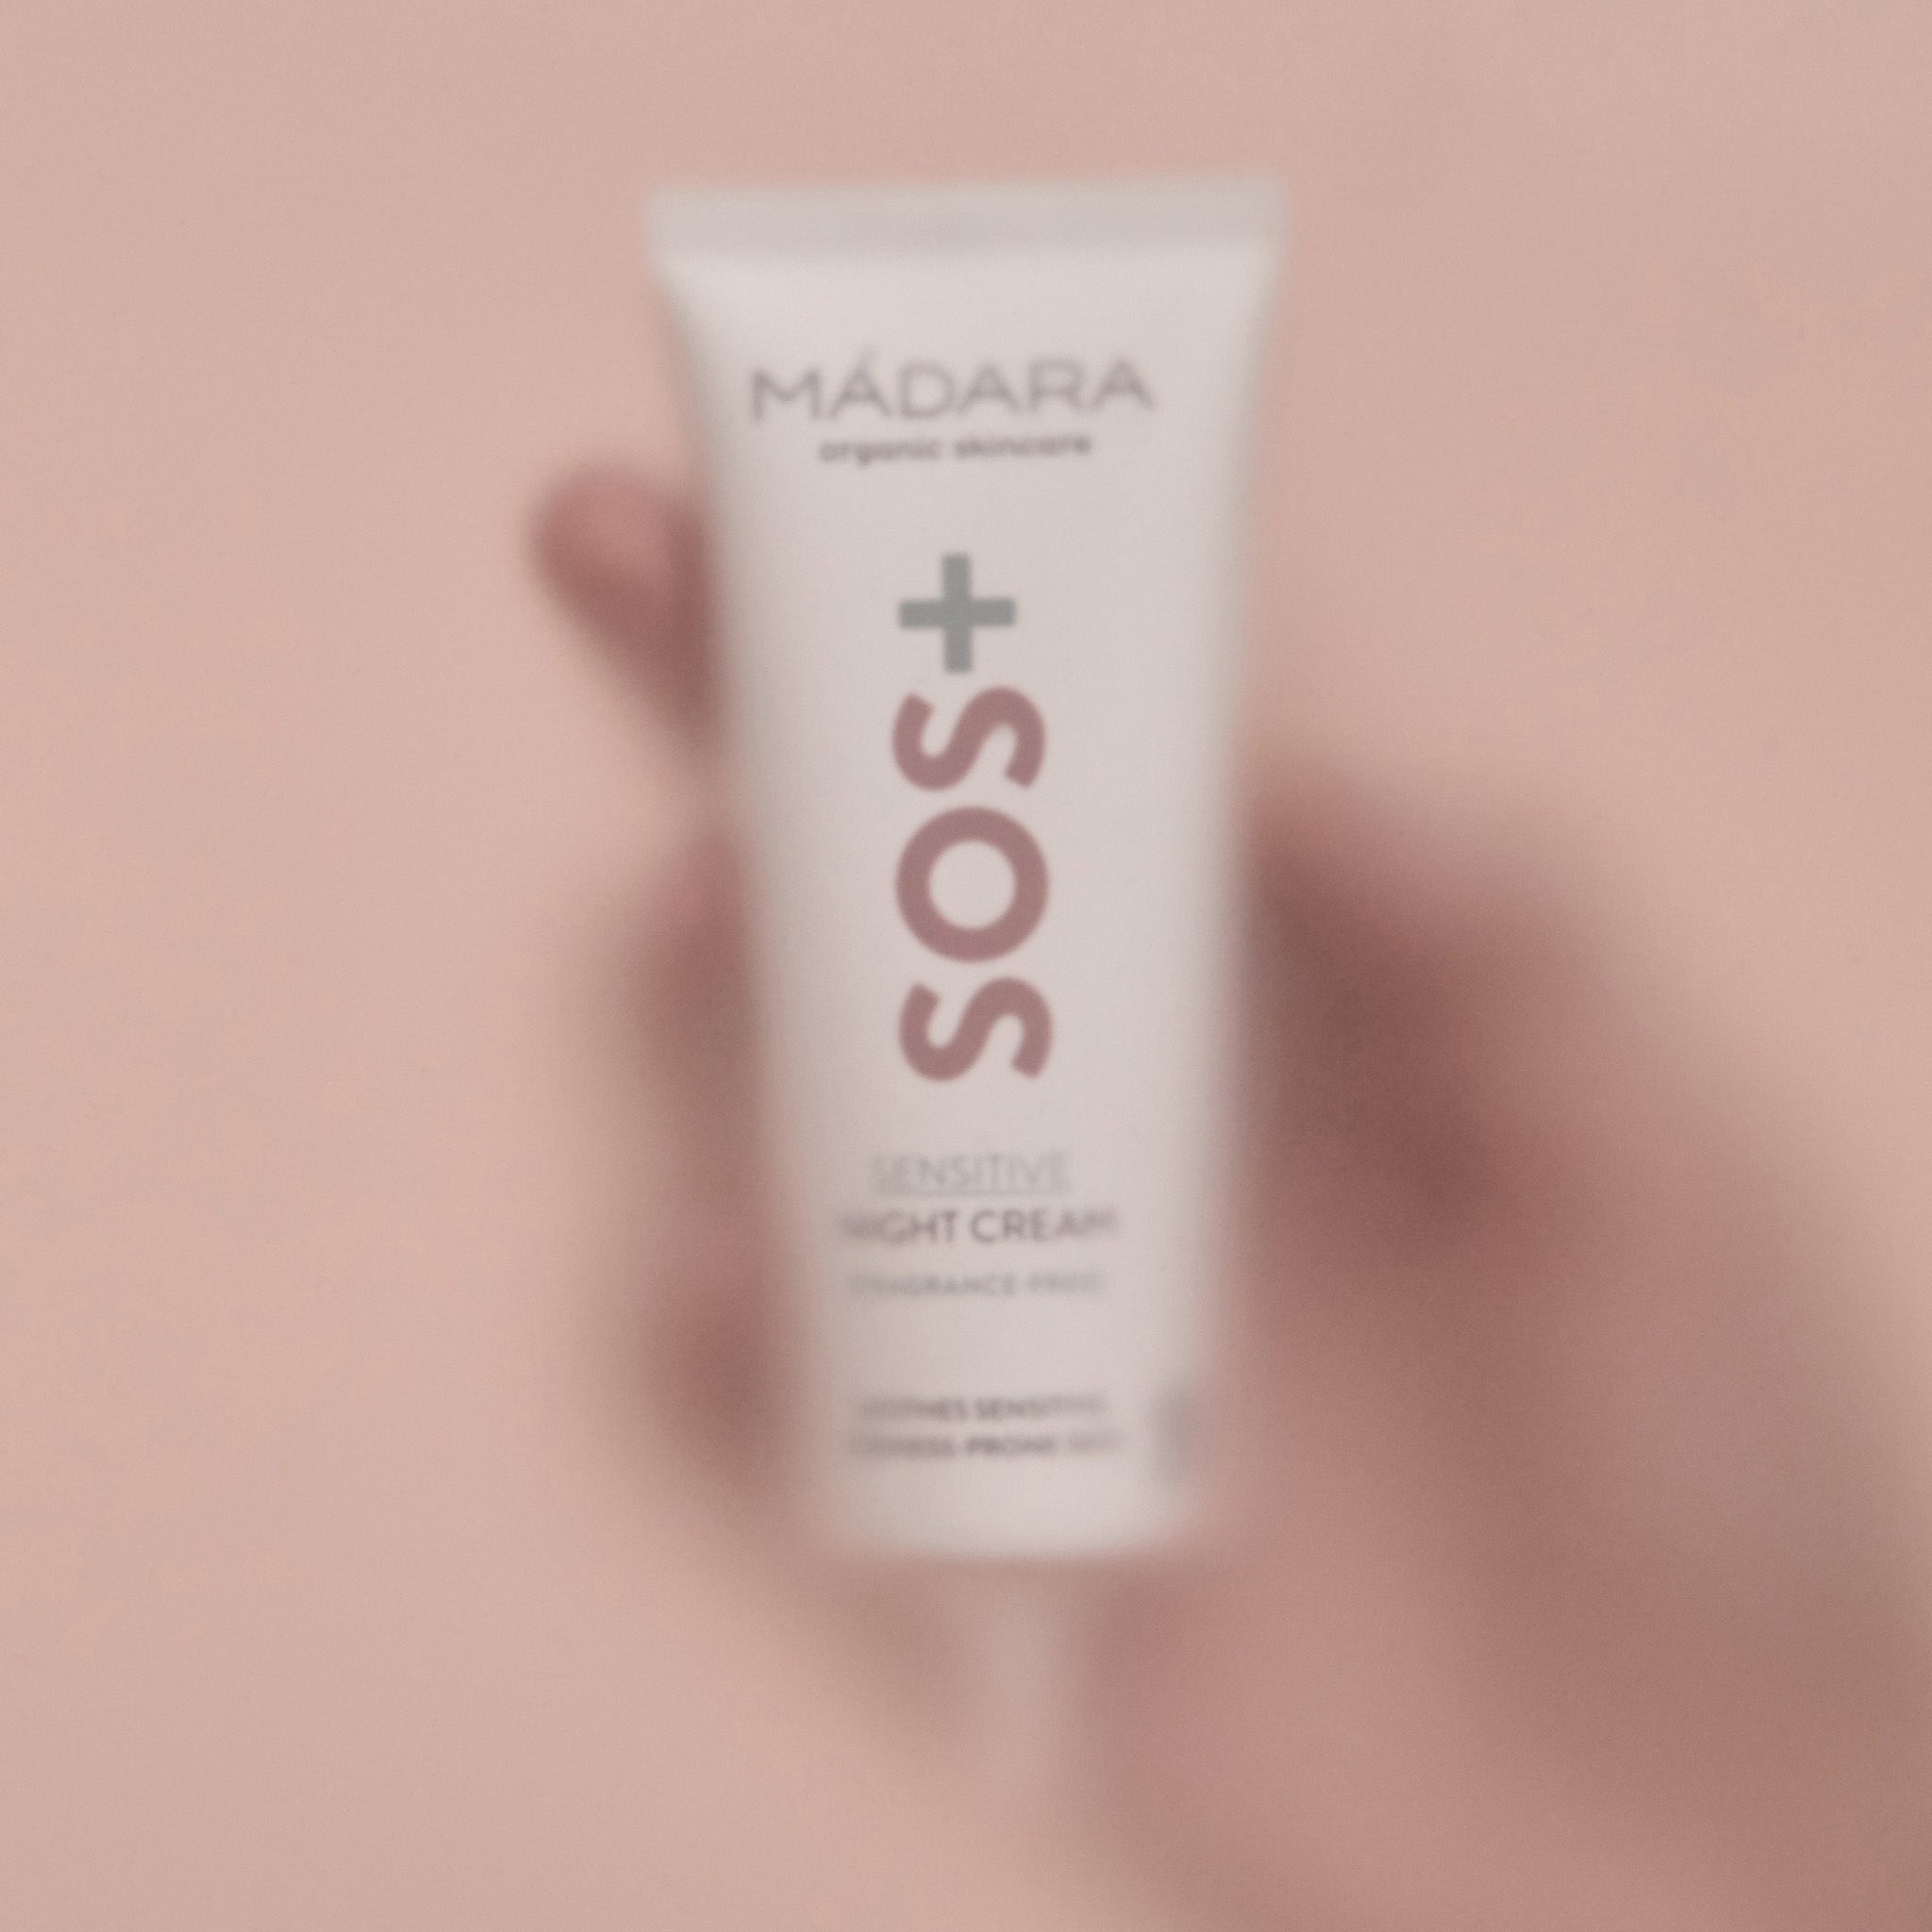 MADARA SOS+ SENSITIVE Night Cream 17ml - Free with £60 Spend - mypure.co.uk